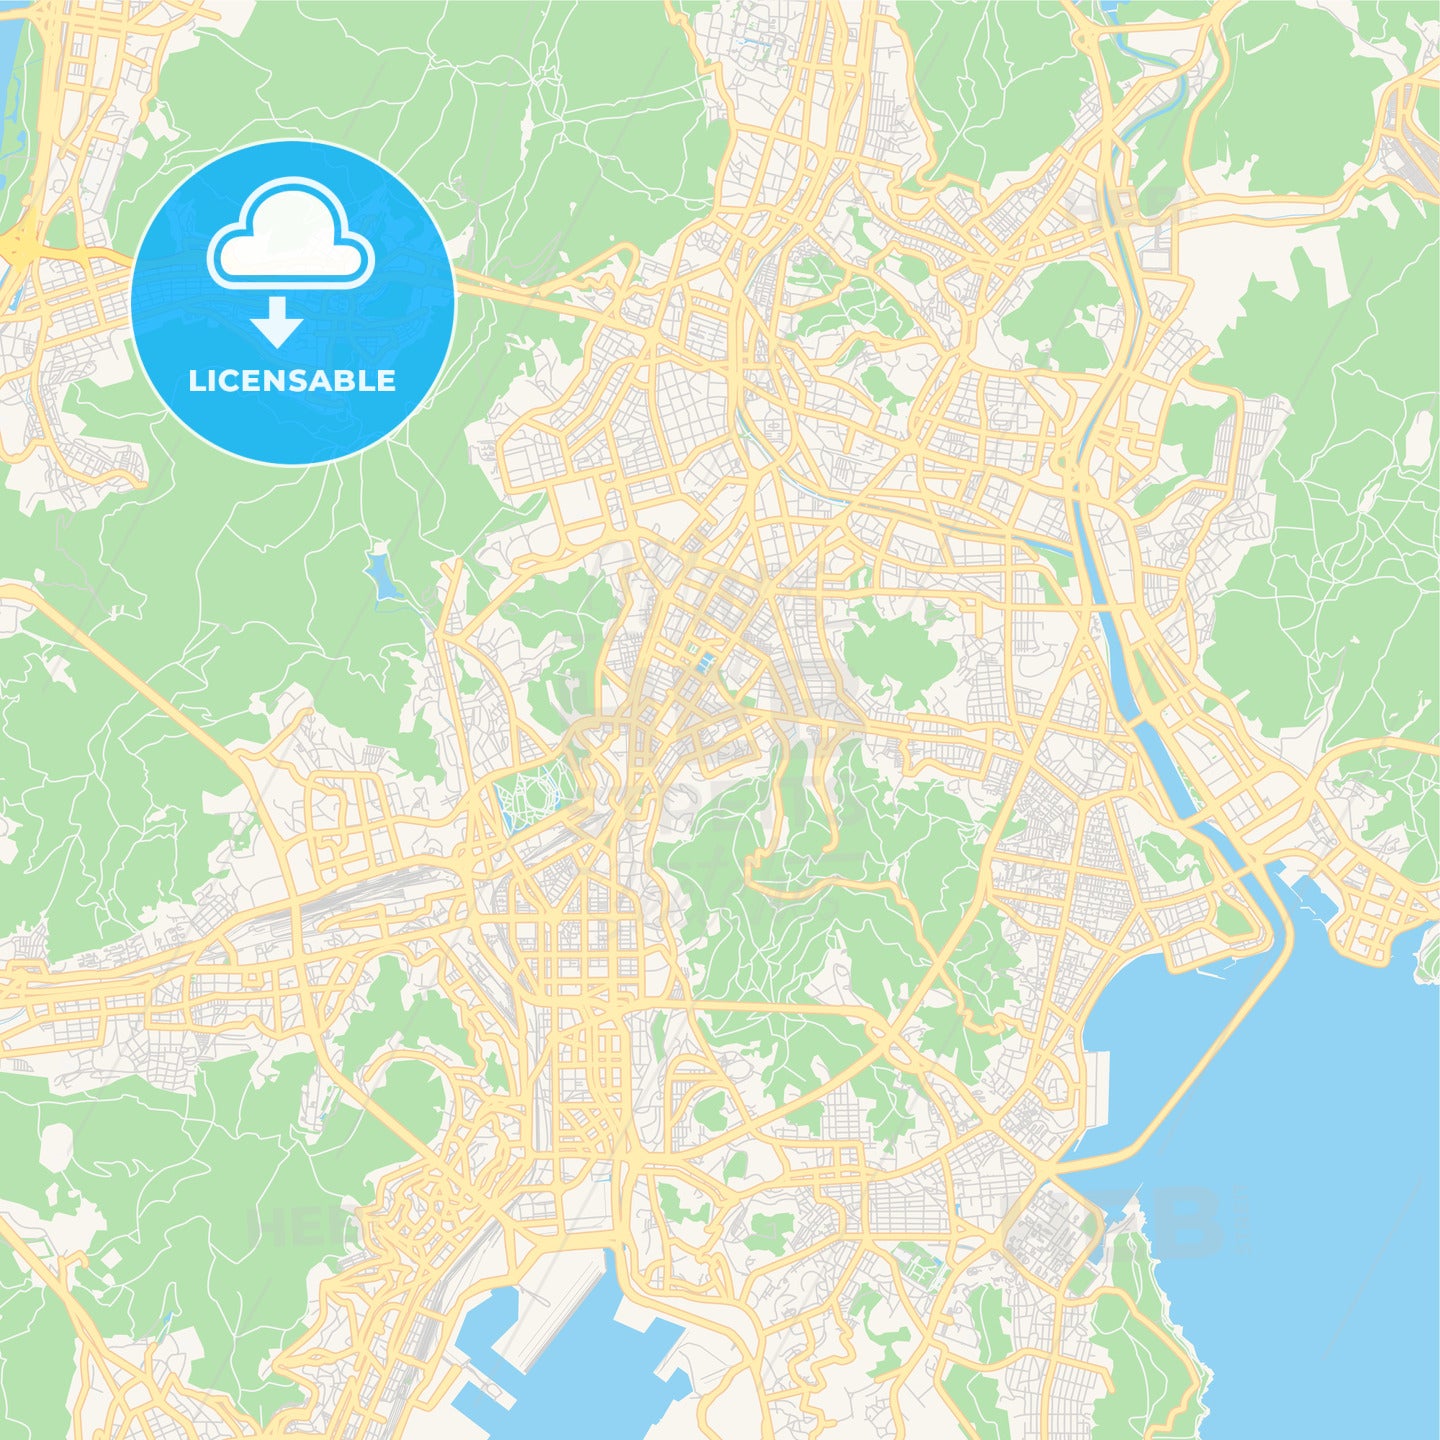 Printable street map of Busan, South Korea